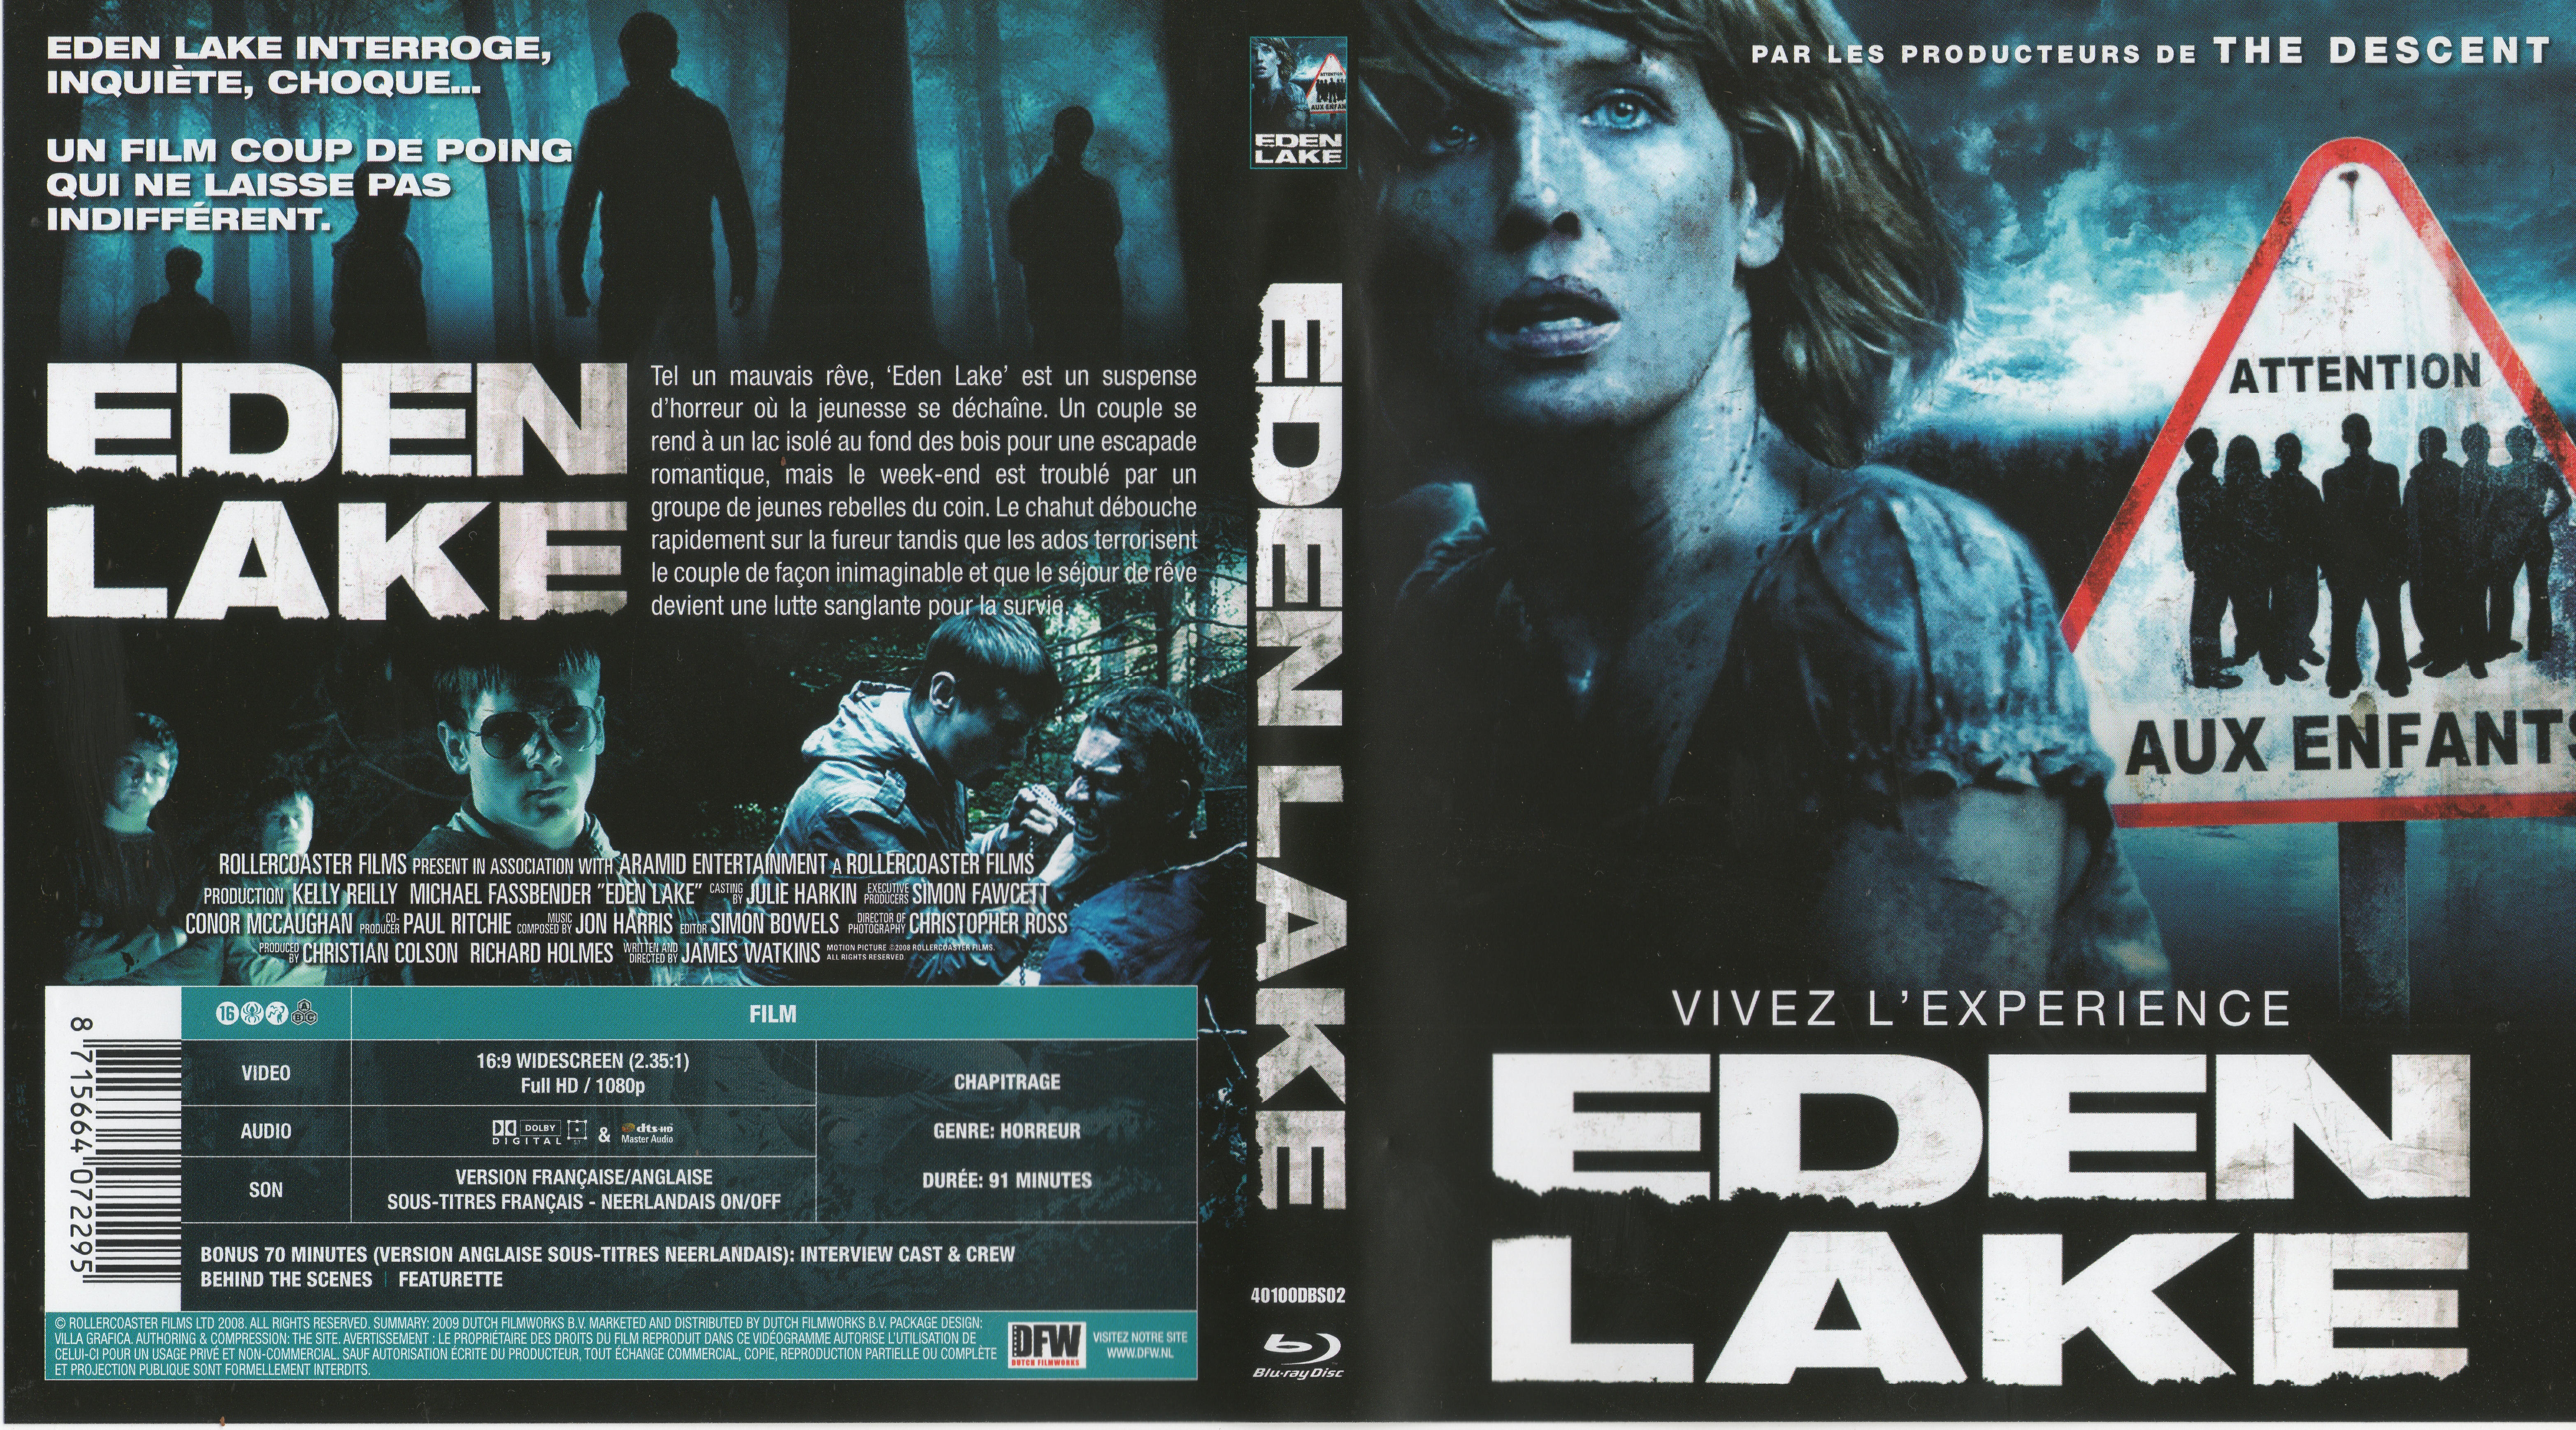 Jaquette DVD Eden lake (BLU-RAY) v2